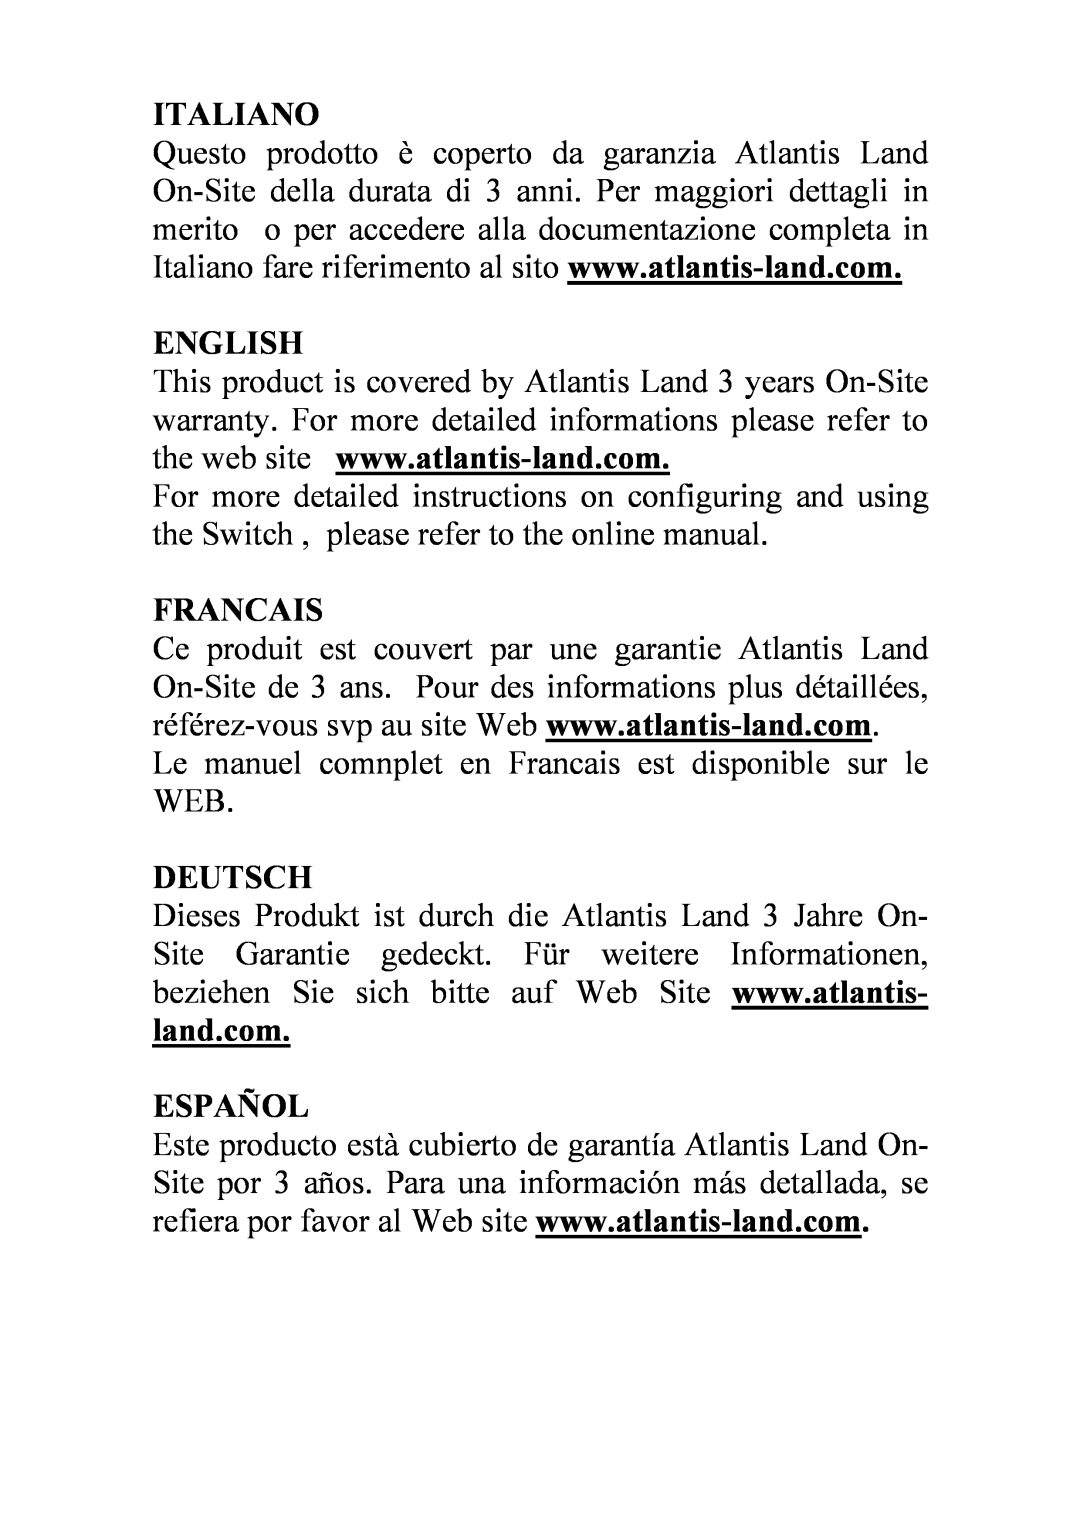 Atlantis Land AO2-F5P manual Le manuel comnplet en Francais est disponible sur le WEB, Italiano, English, Deutsch, Español 